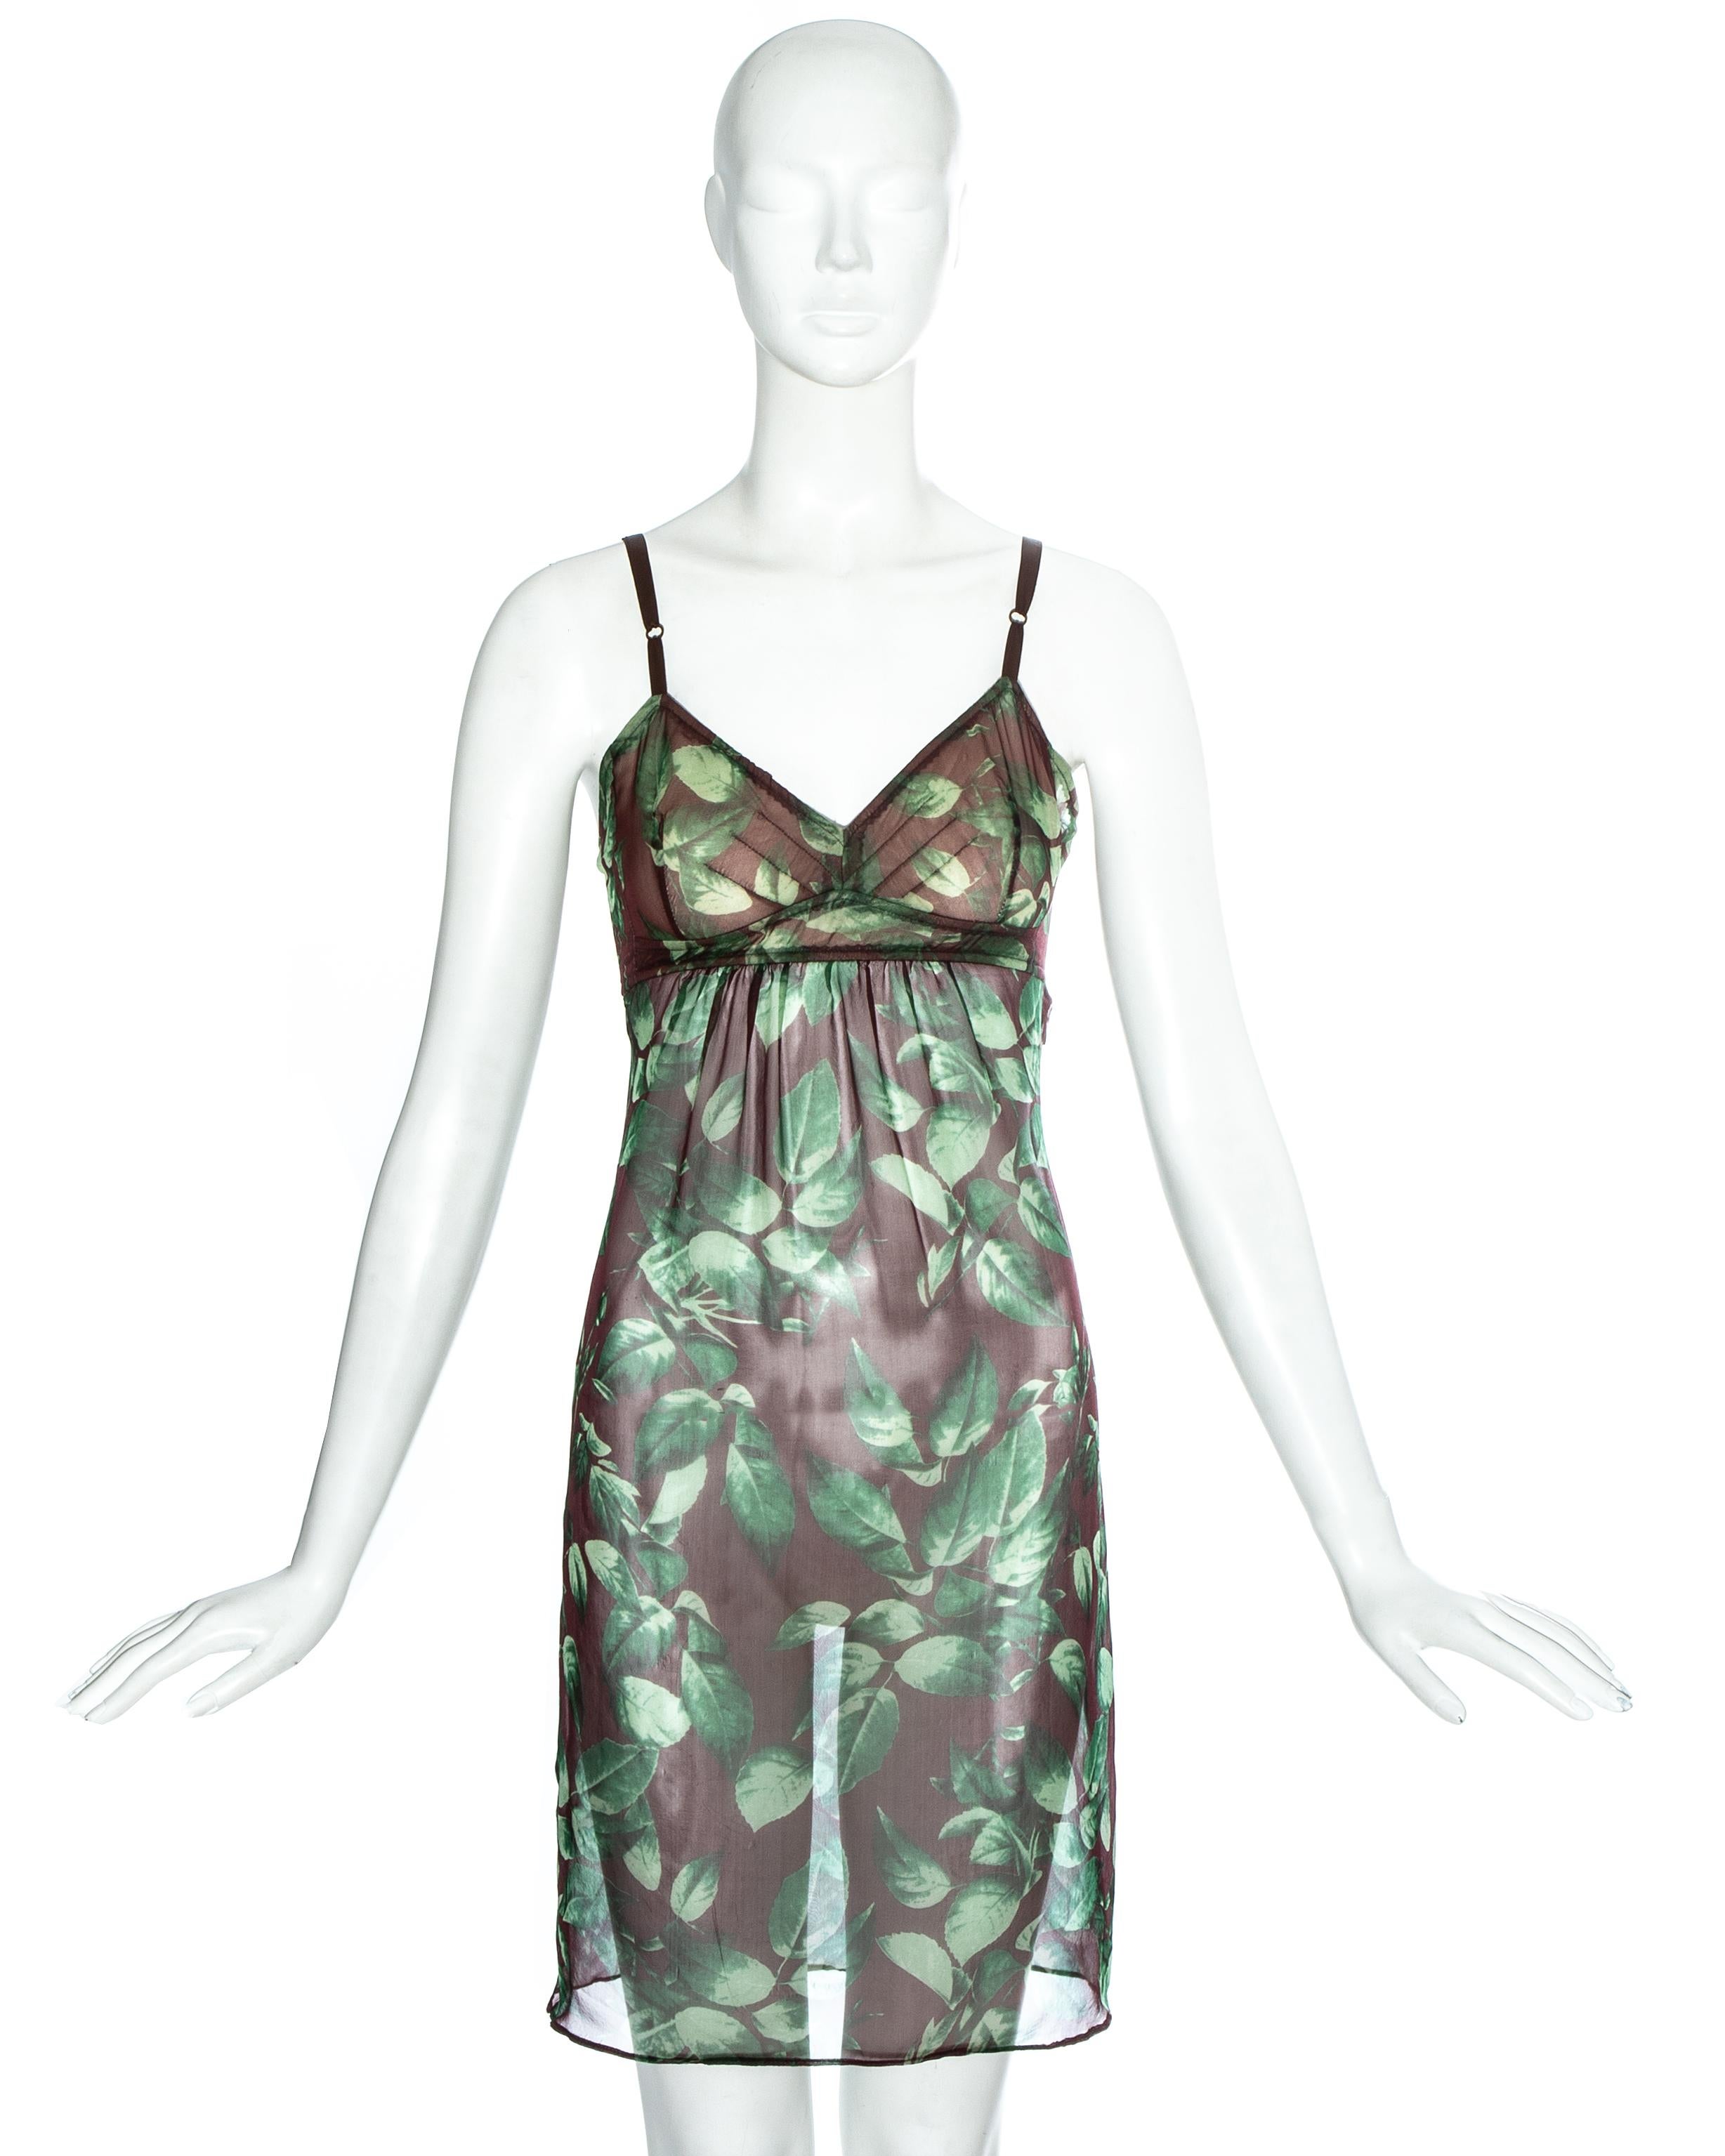 Dolce & Gabbana green leaf printed silk chiffon slip dress with attached bra

Spring-Summer 1997